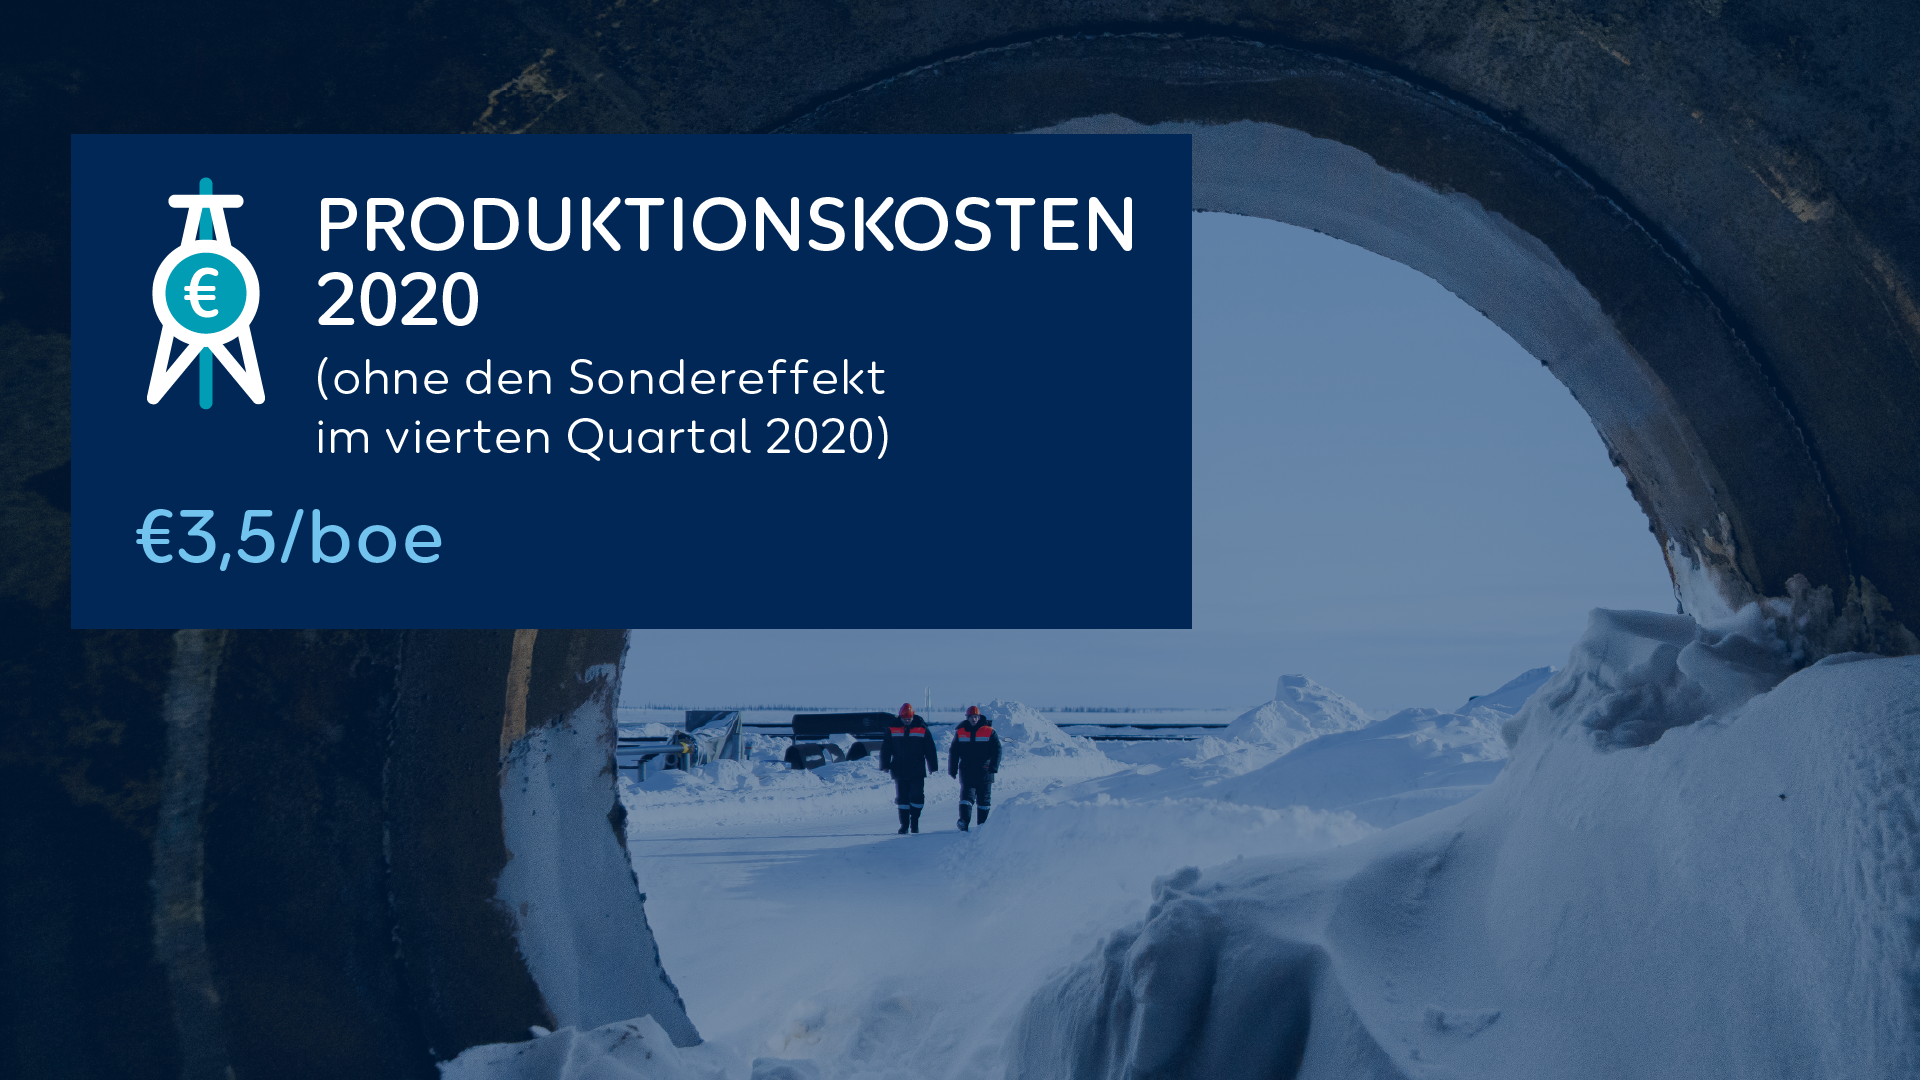 Wintershall Dea Produktionskosten 2020